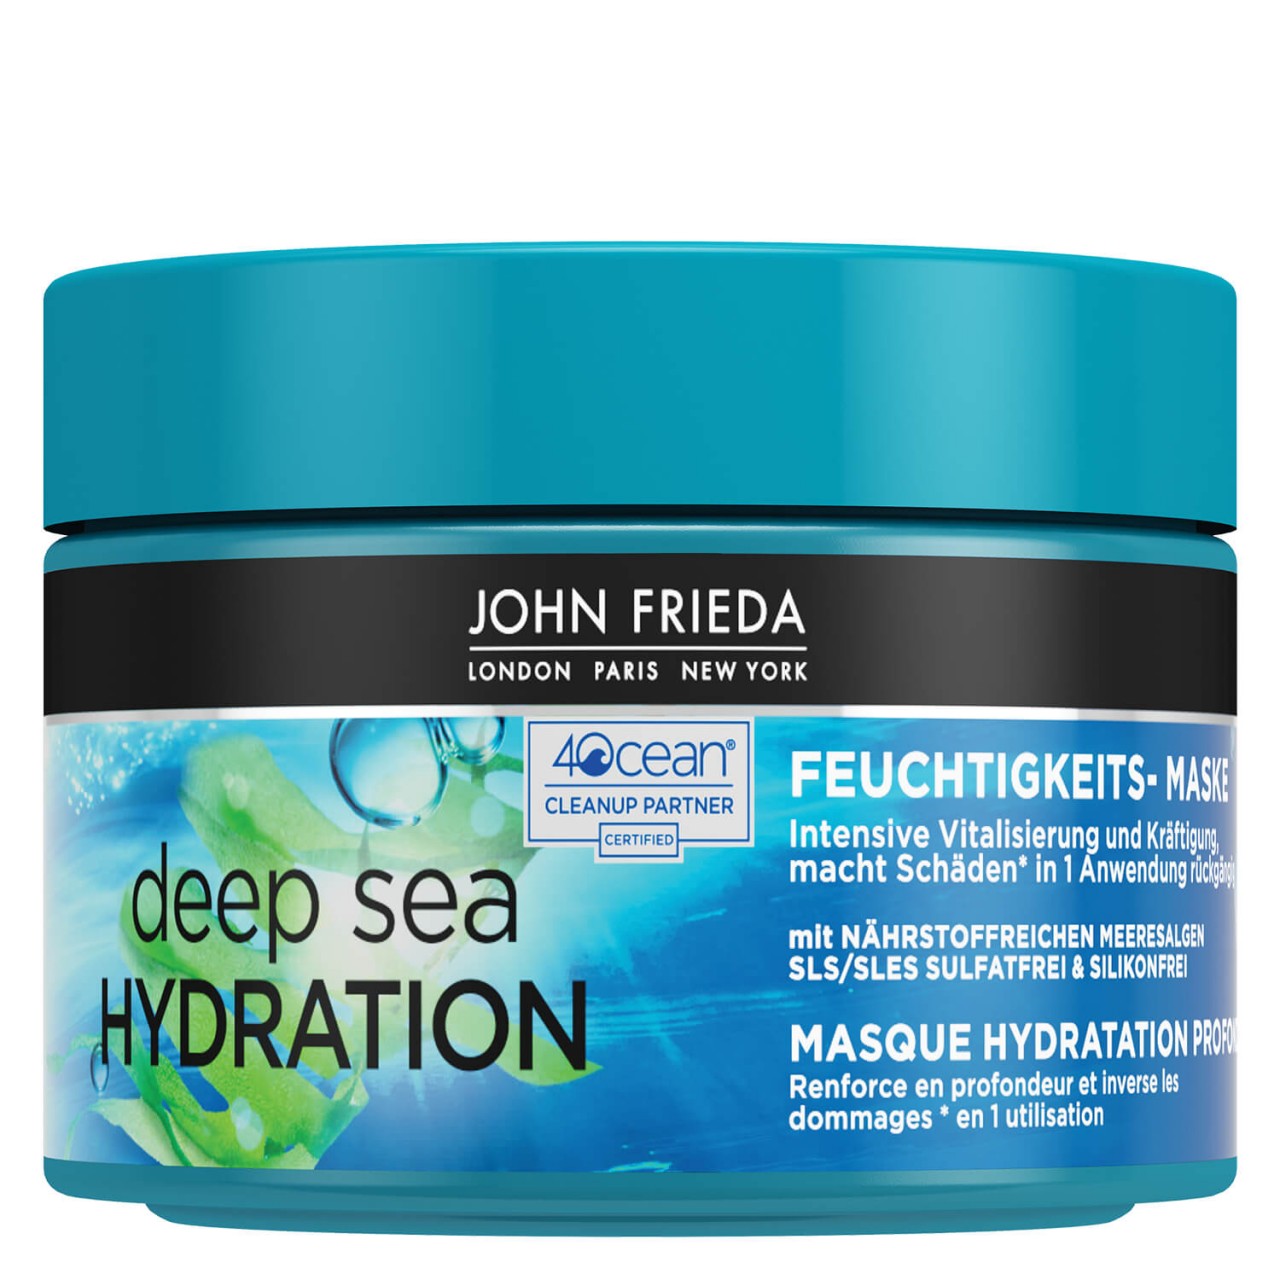 Deep Sea Hydration - Moisturizing Masque von John Frieda